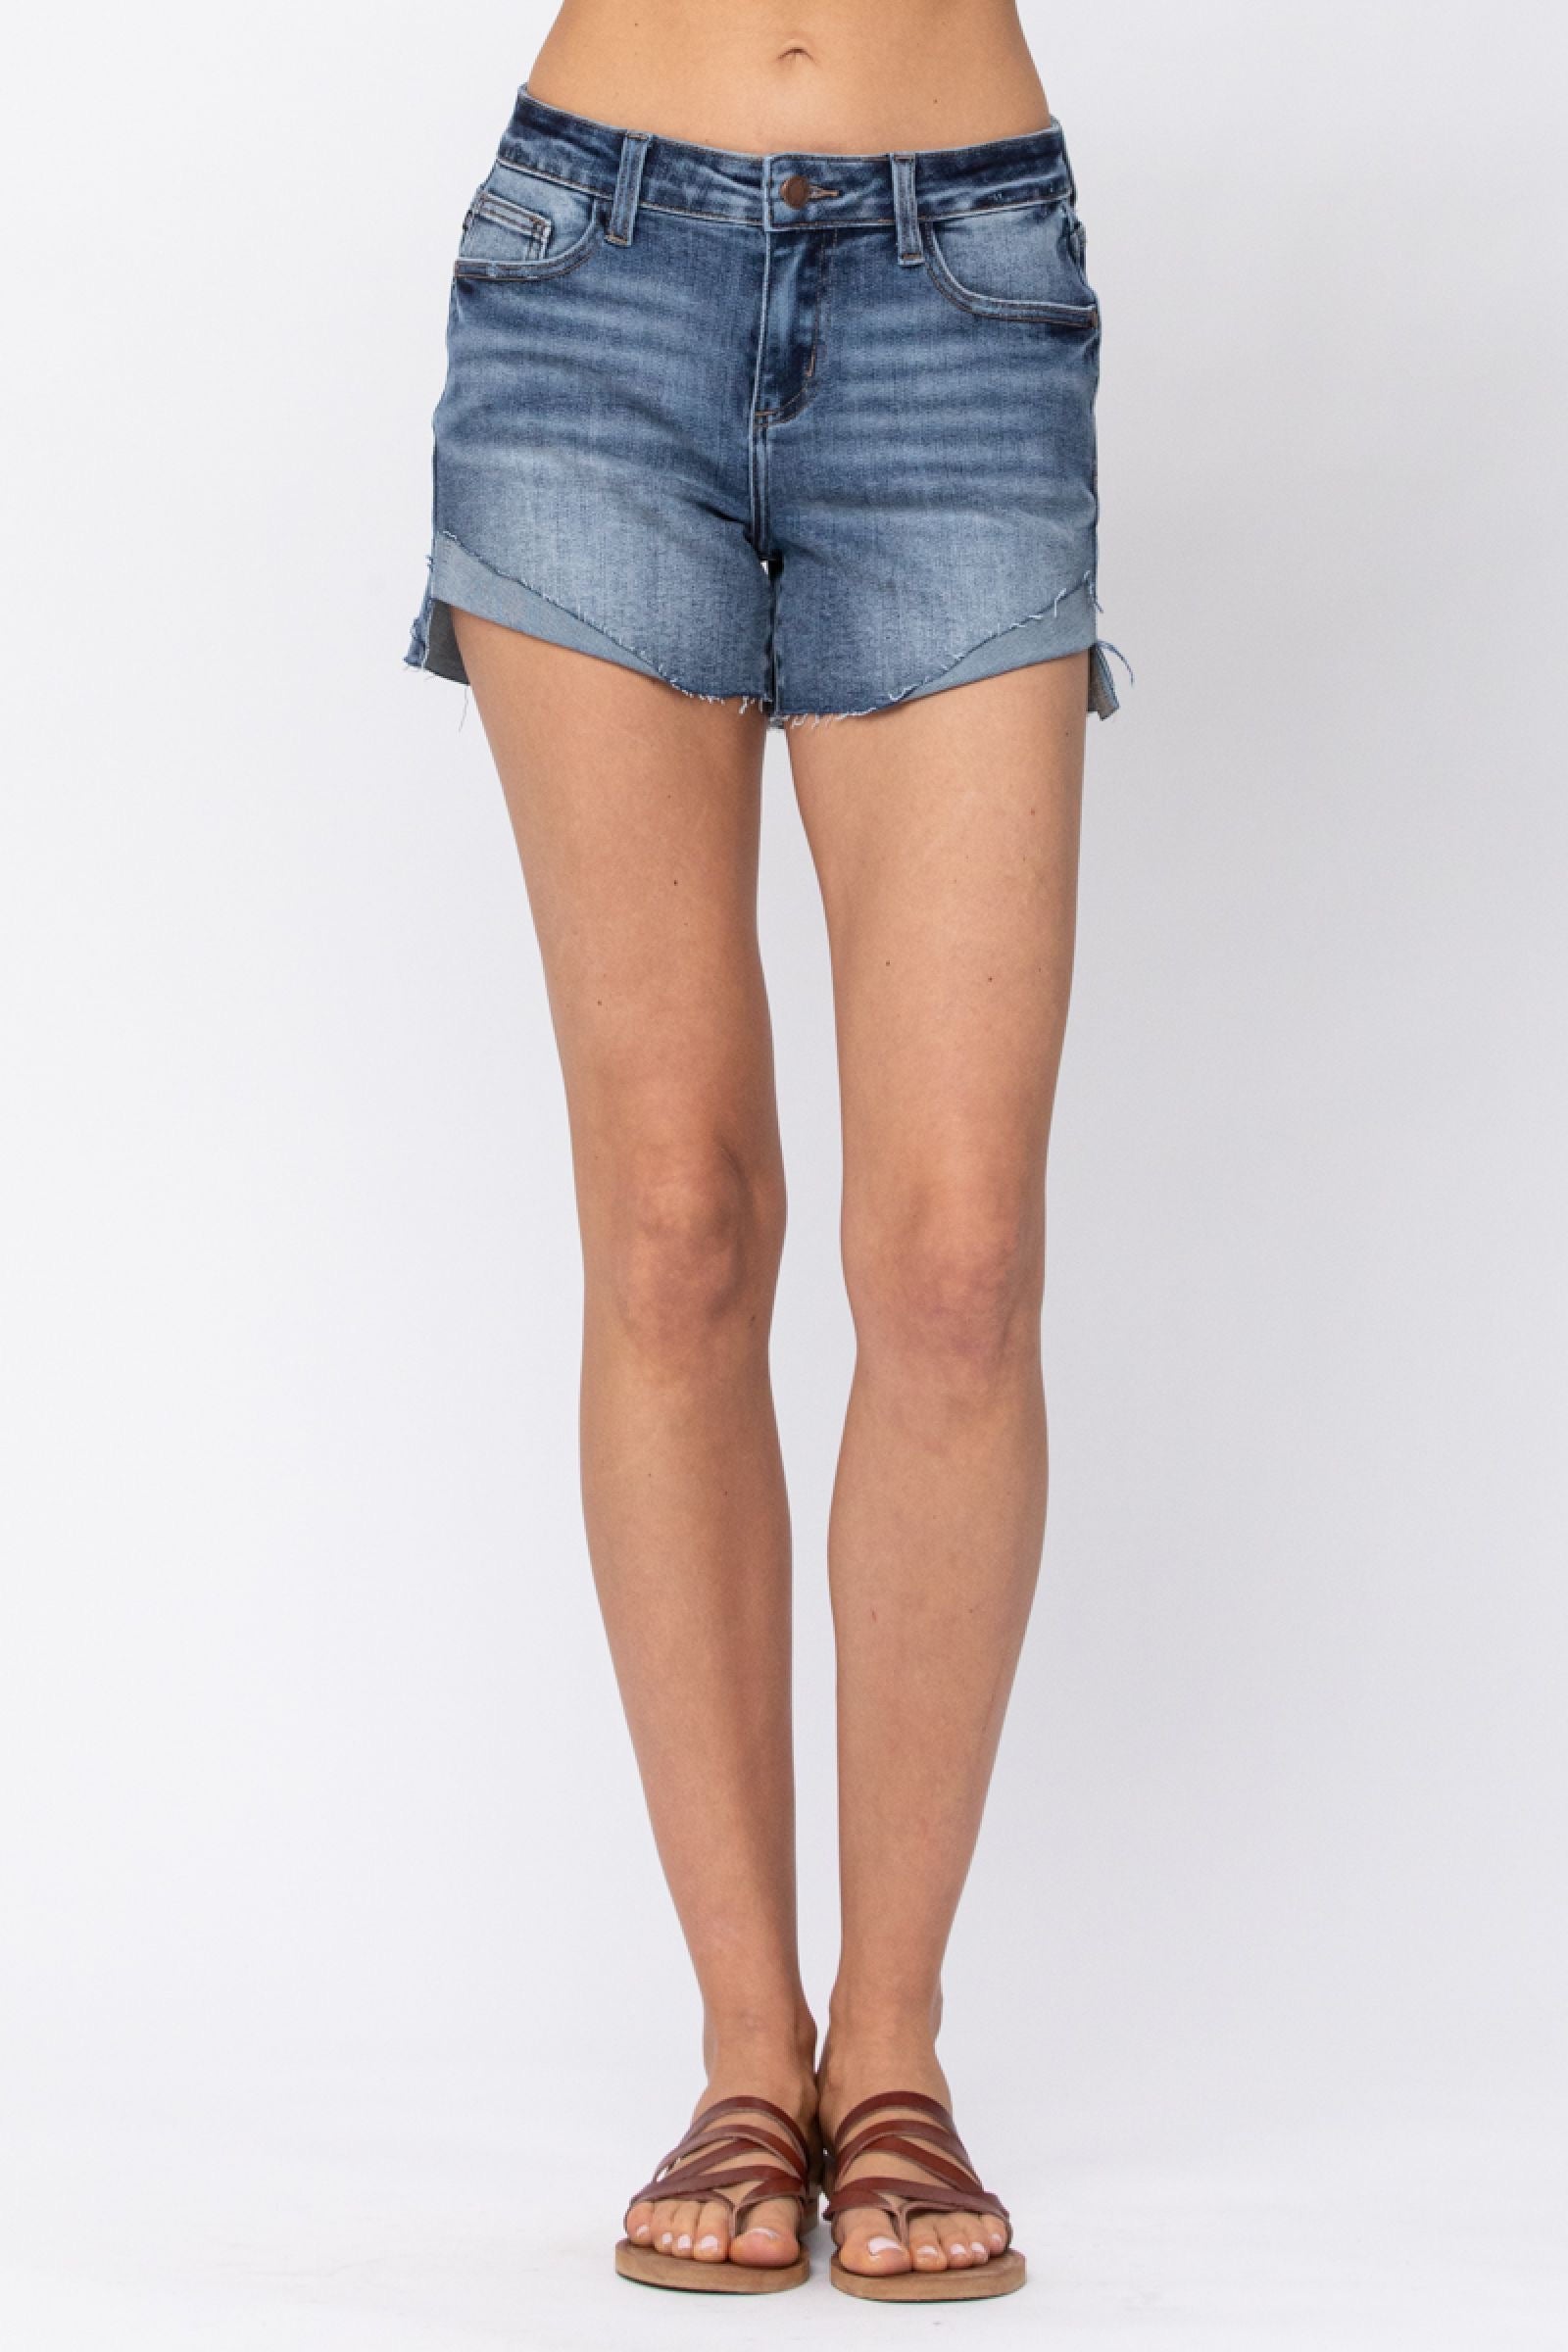 Judy Blue Half Cuffed Shorts - Style 150019